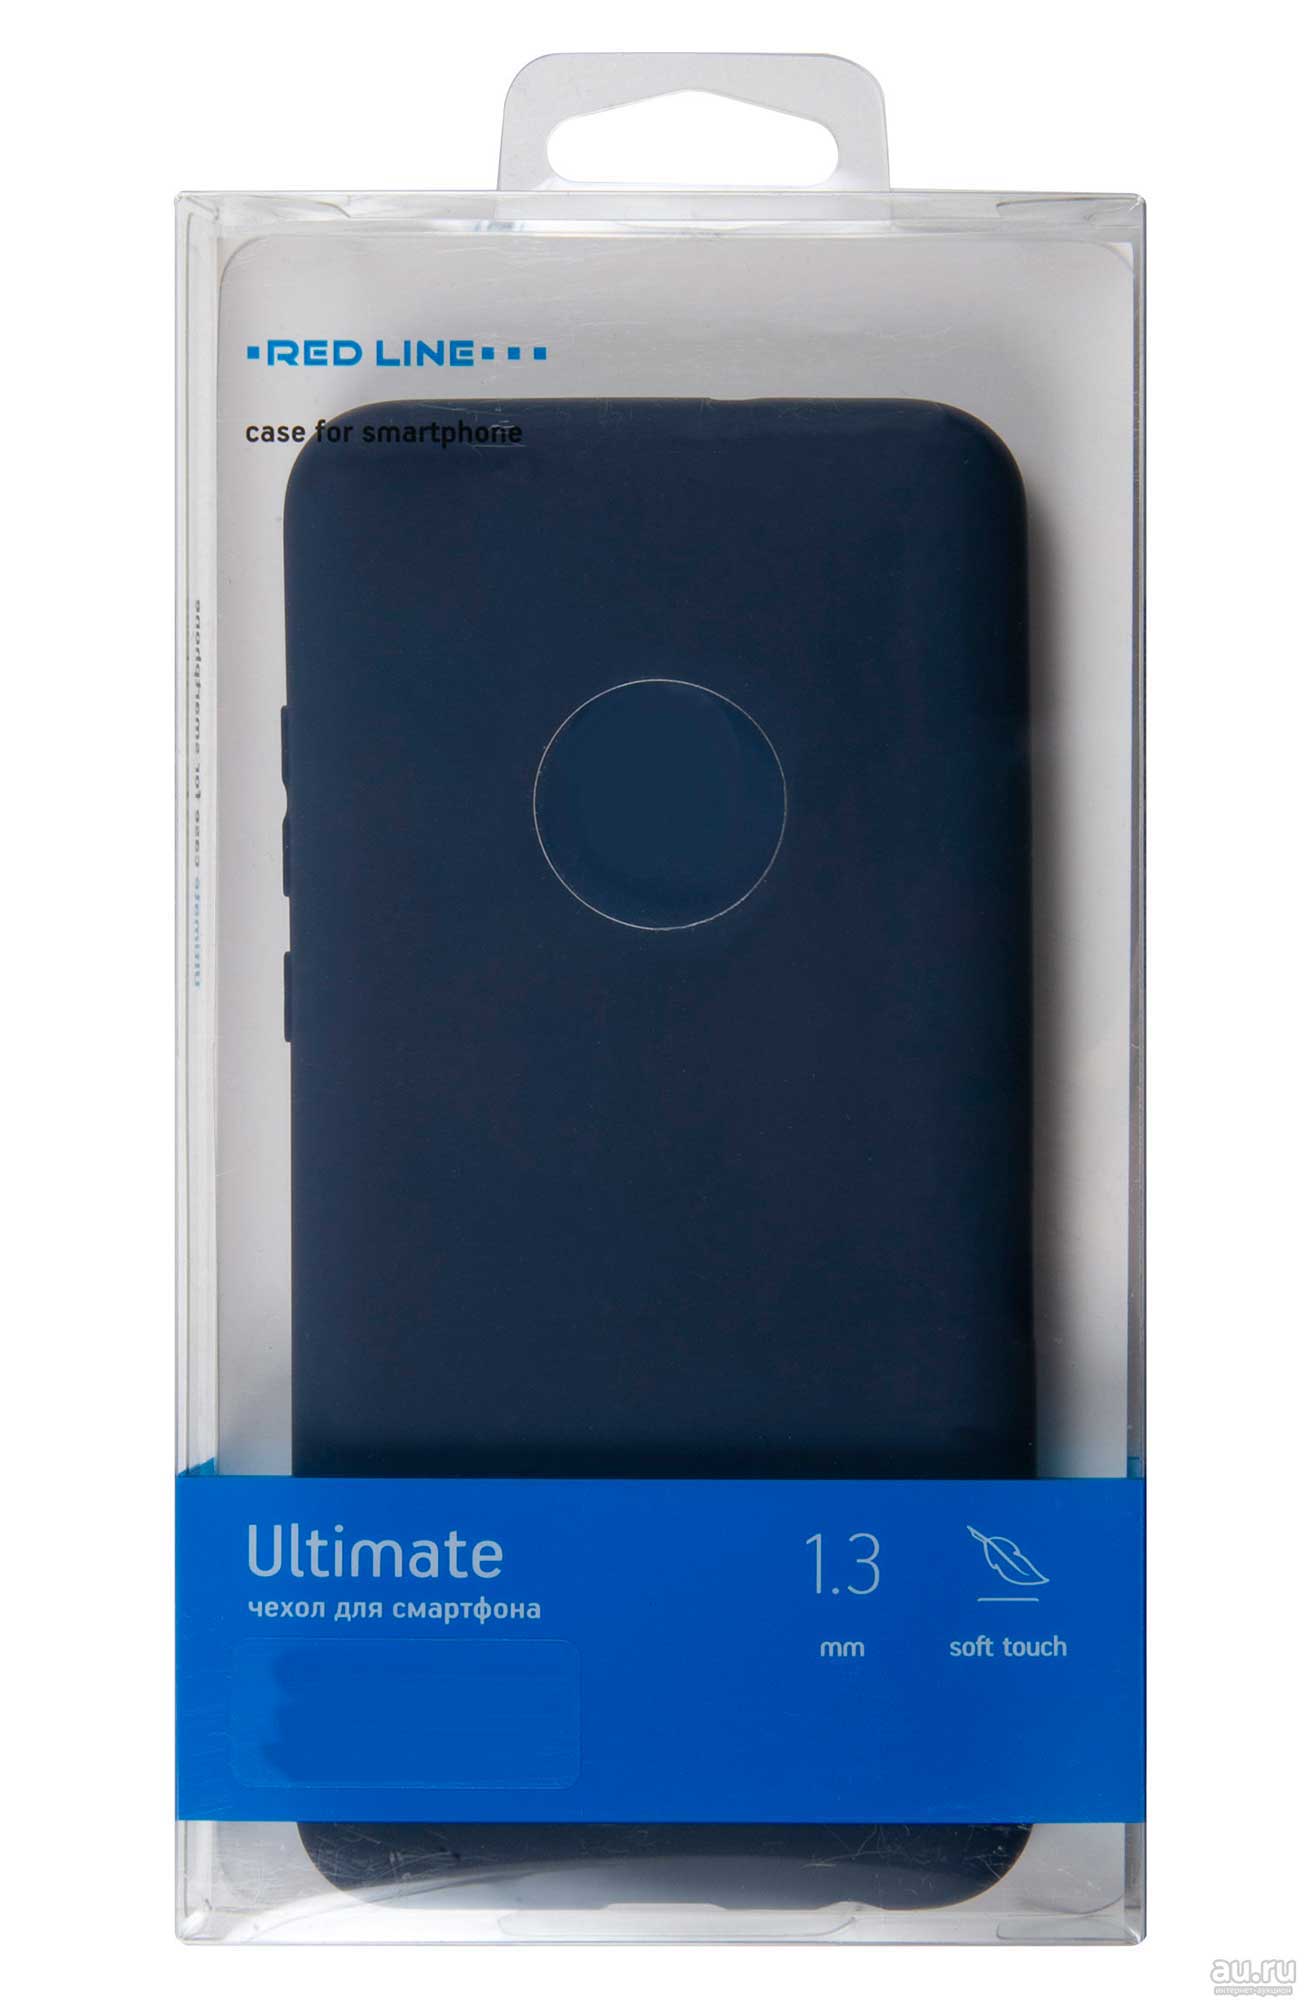 Чехол защитный Red Line Ultimate для Itel Vision 2S (синий) чехол df для itel vision 2s silicone blue itcase 03